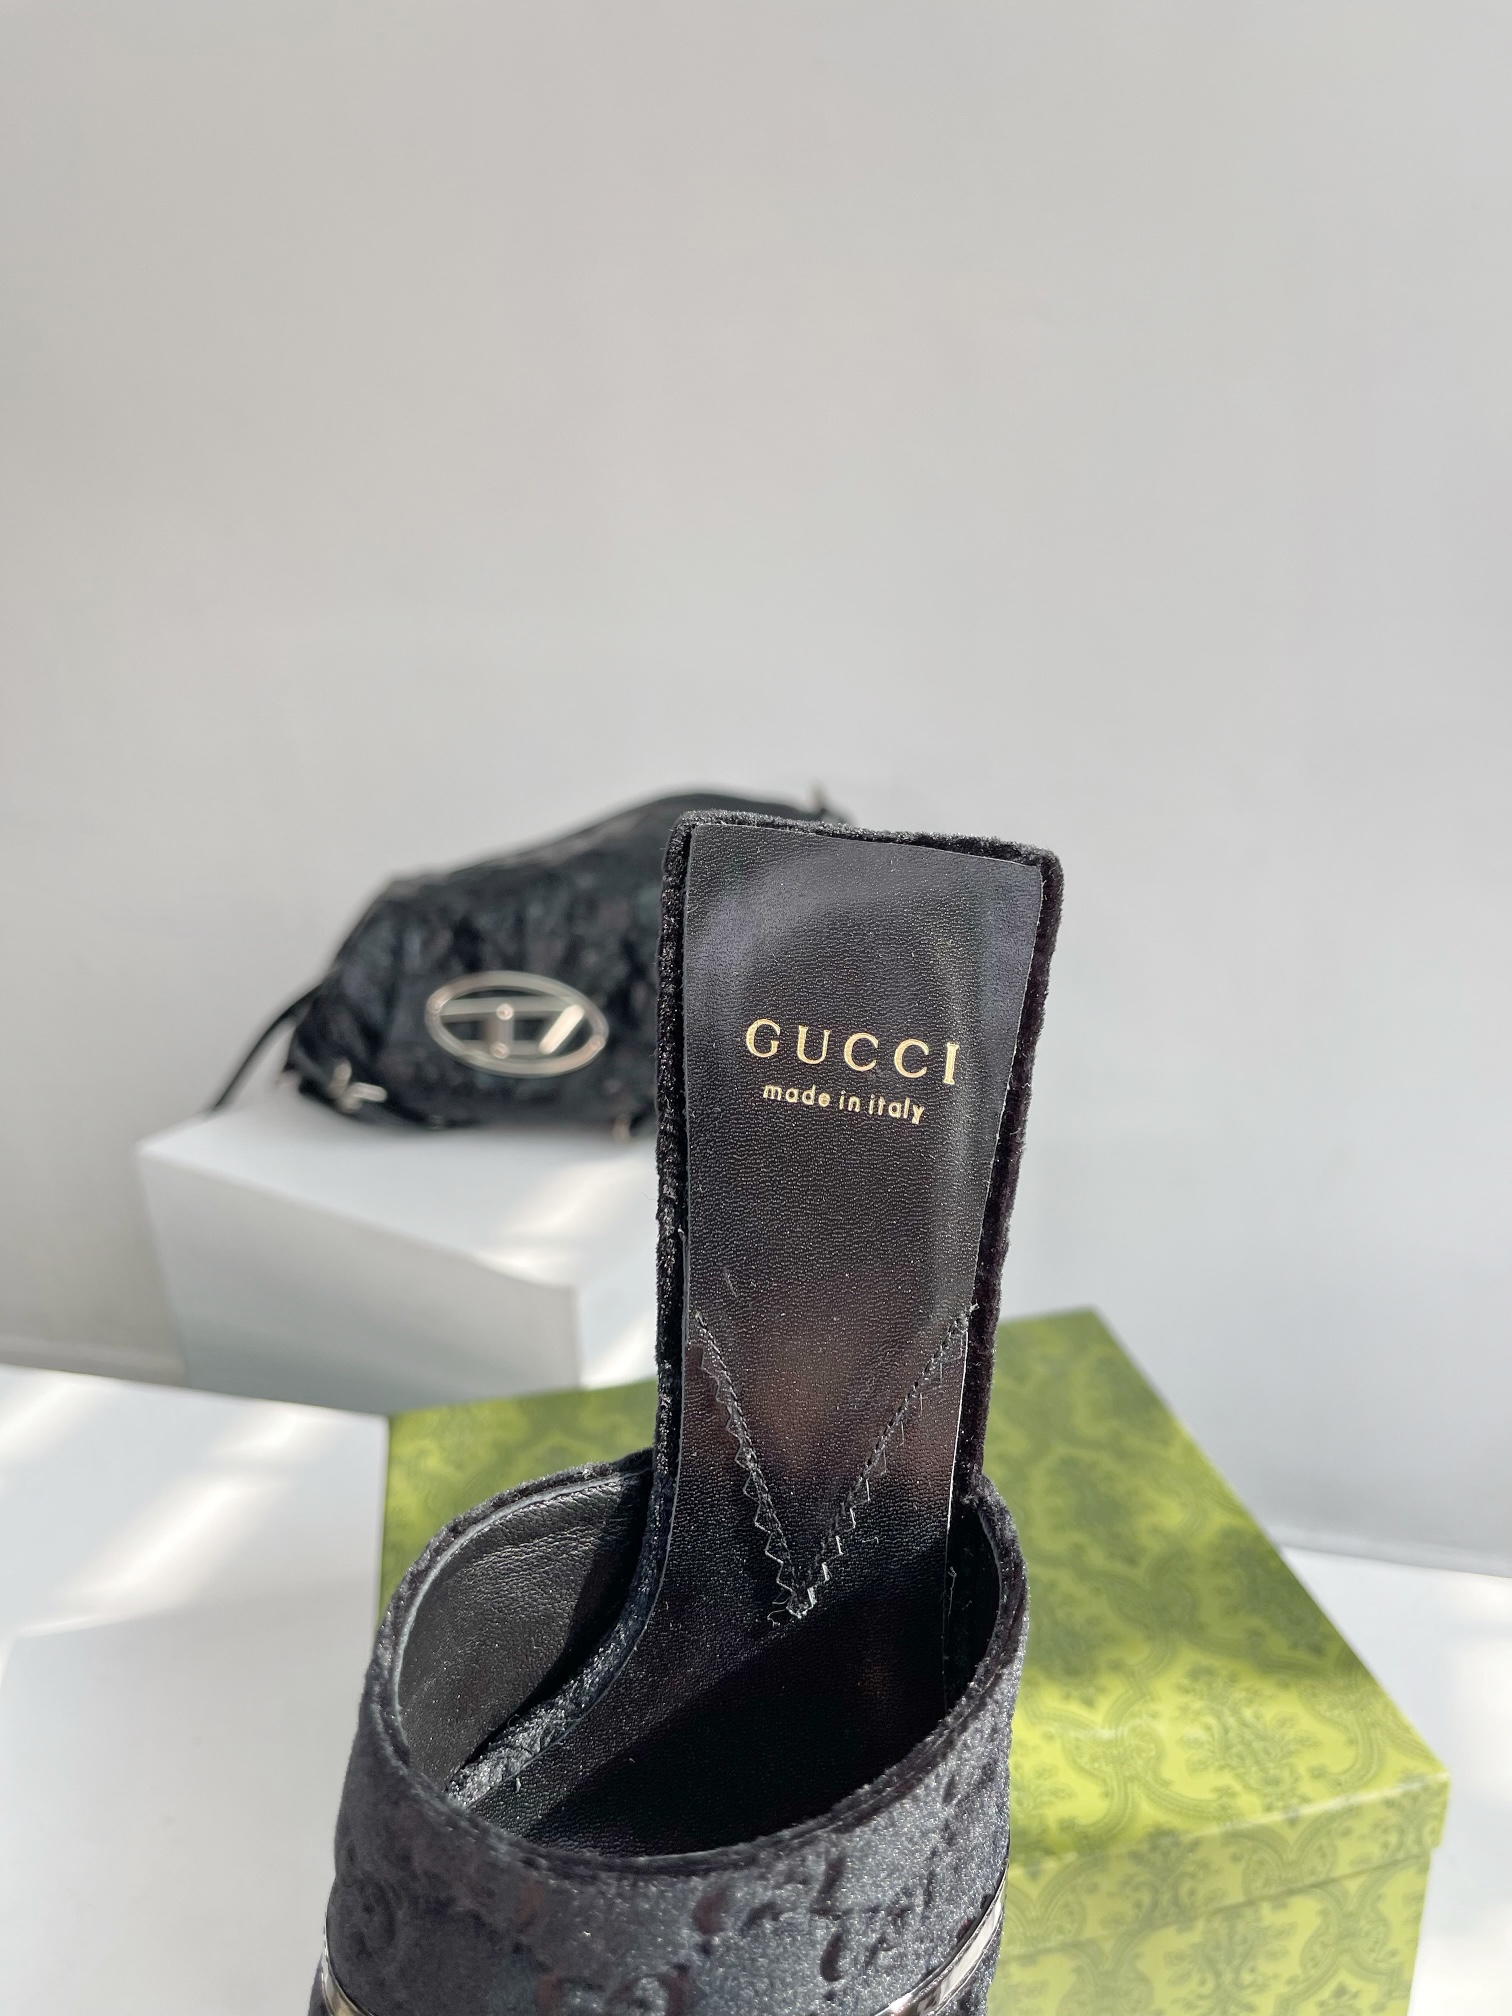 GUCCl最新系列推出[烟花][烟花][烟花]锥型跟圆形互扣式双GG新款凉鞋拖鞋原汁原味原单品质!每个细